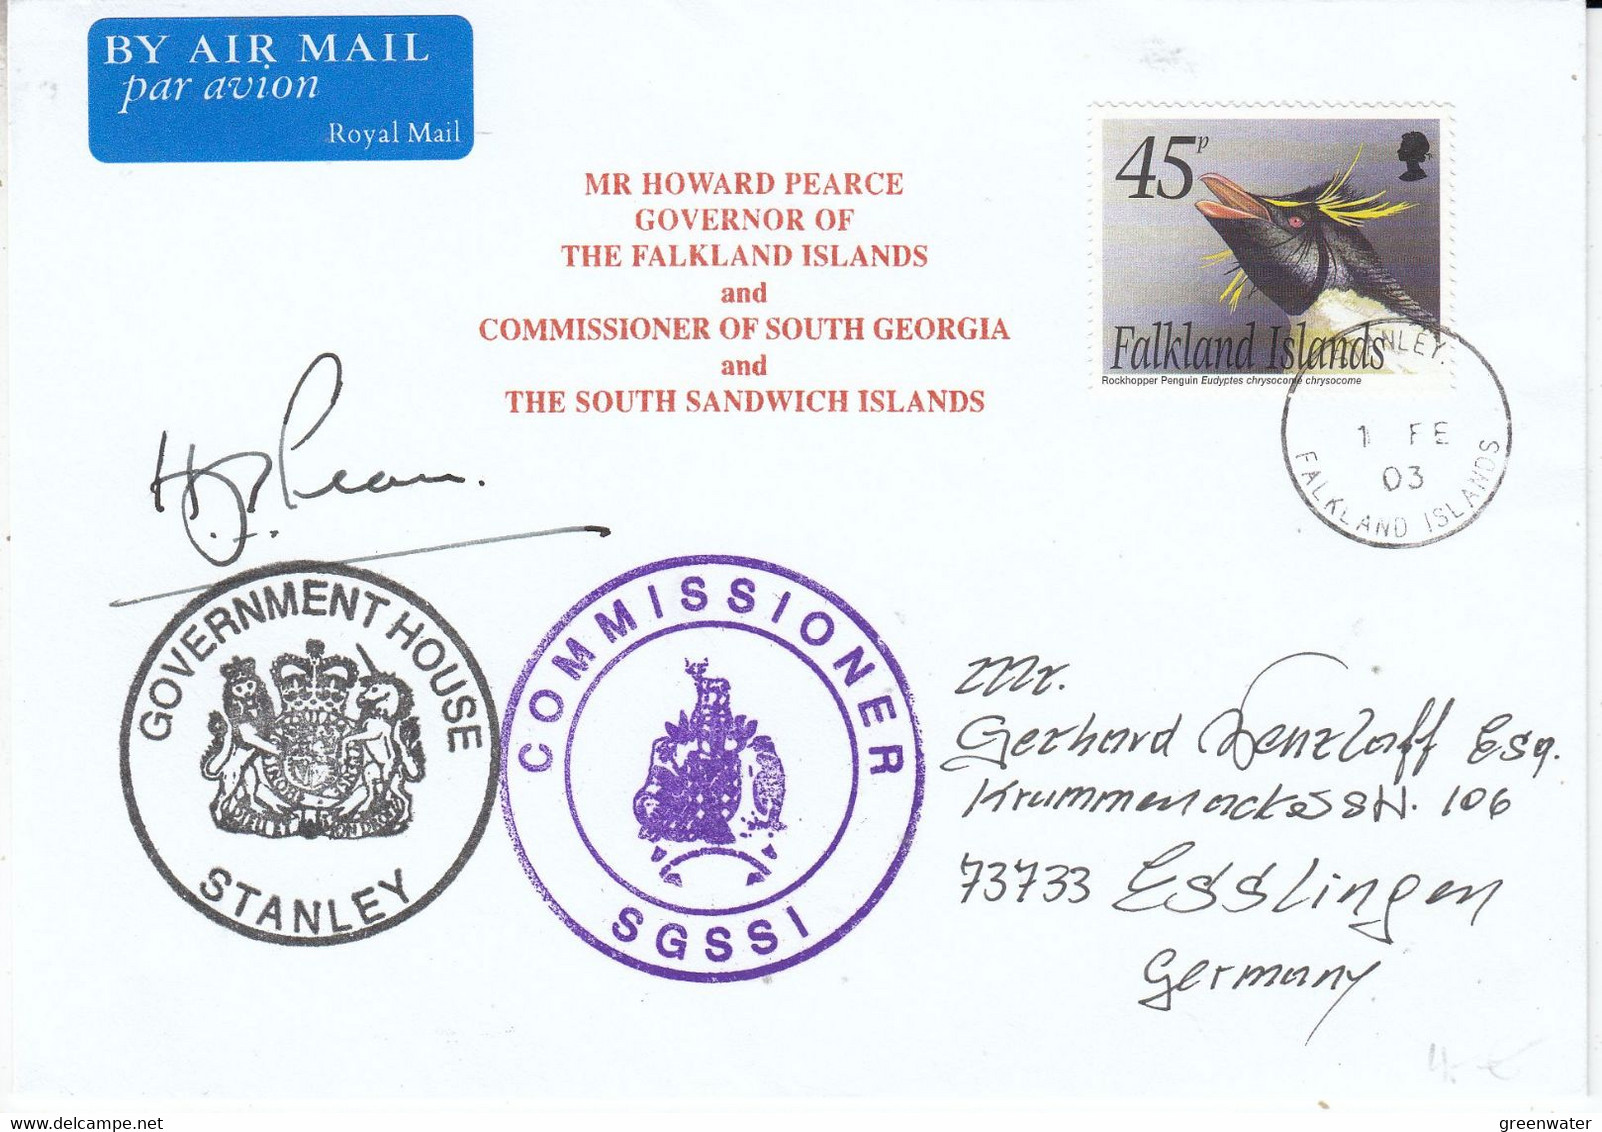 Falkland Islands 2003 Cover Send By Howard Pearce Governor Of The Falkland Islands, Signed CA Stanley 1 FE 2003 (FI206) - Falkland Islands